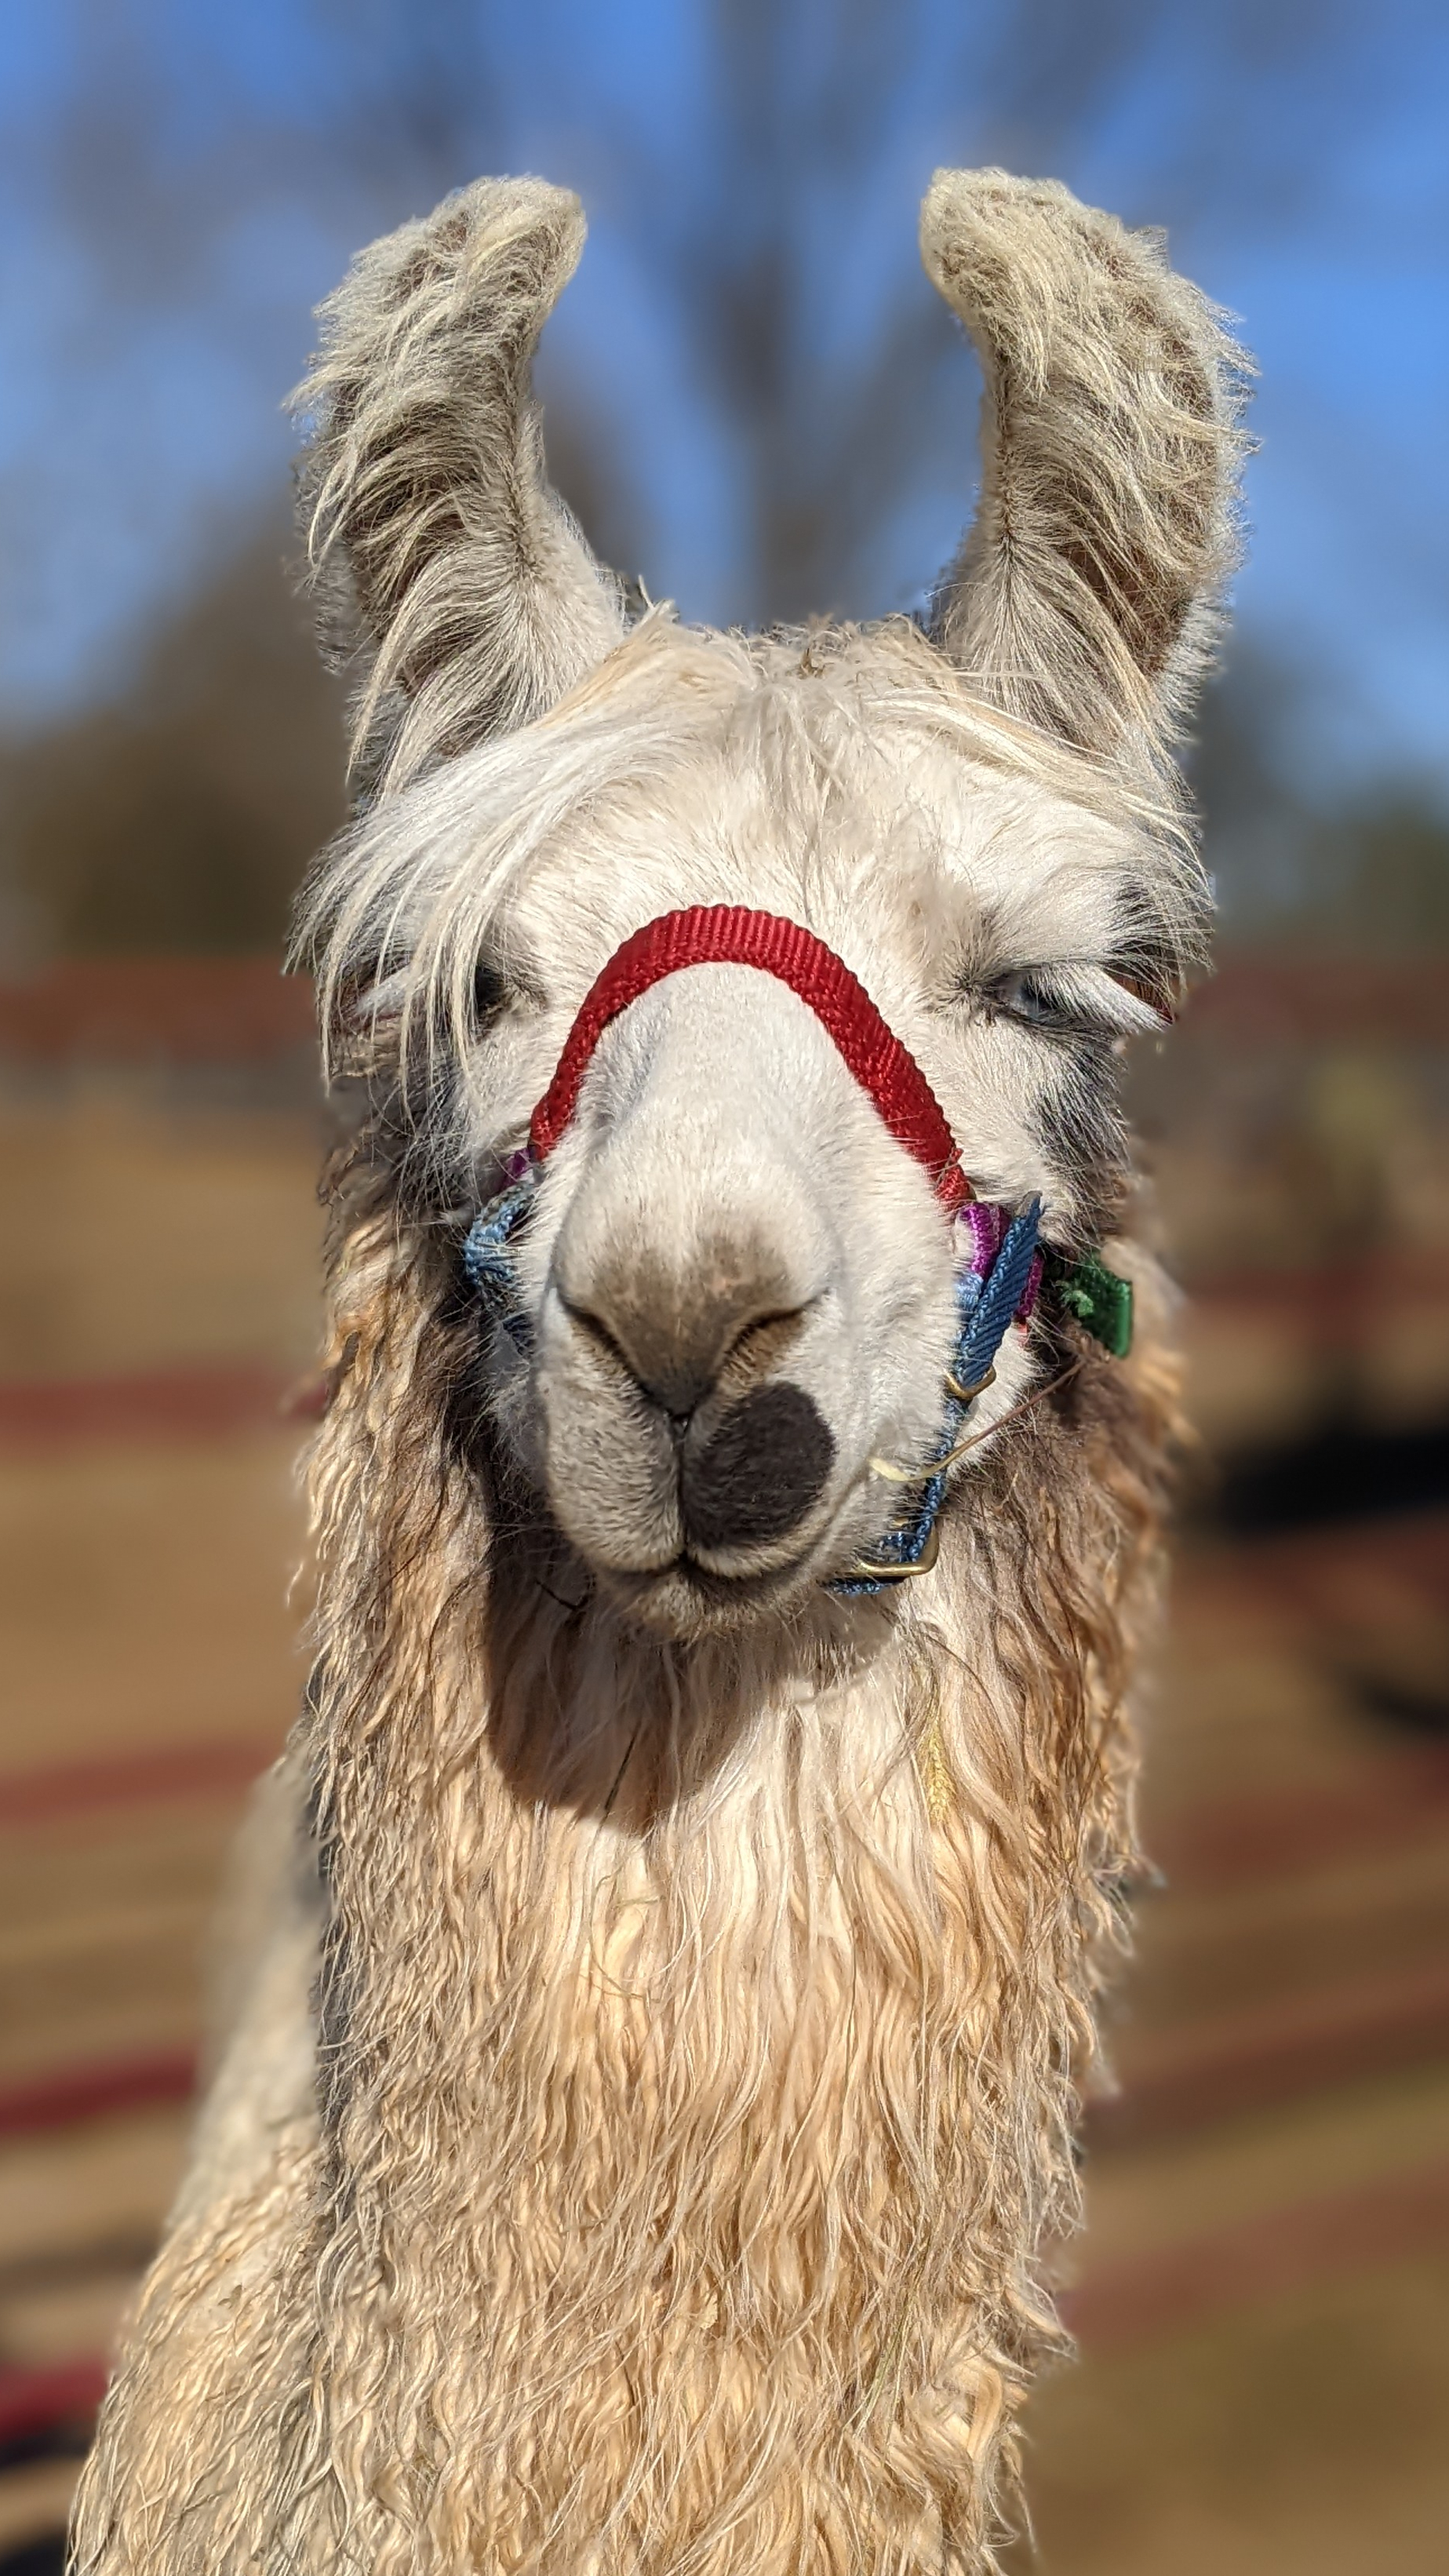 A portrait image of a llama named Lullabye